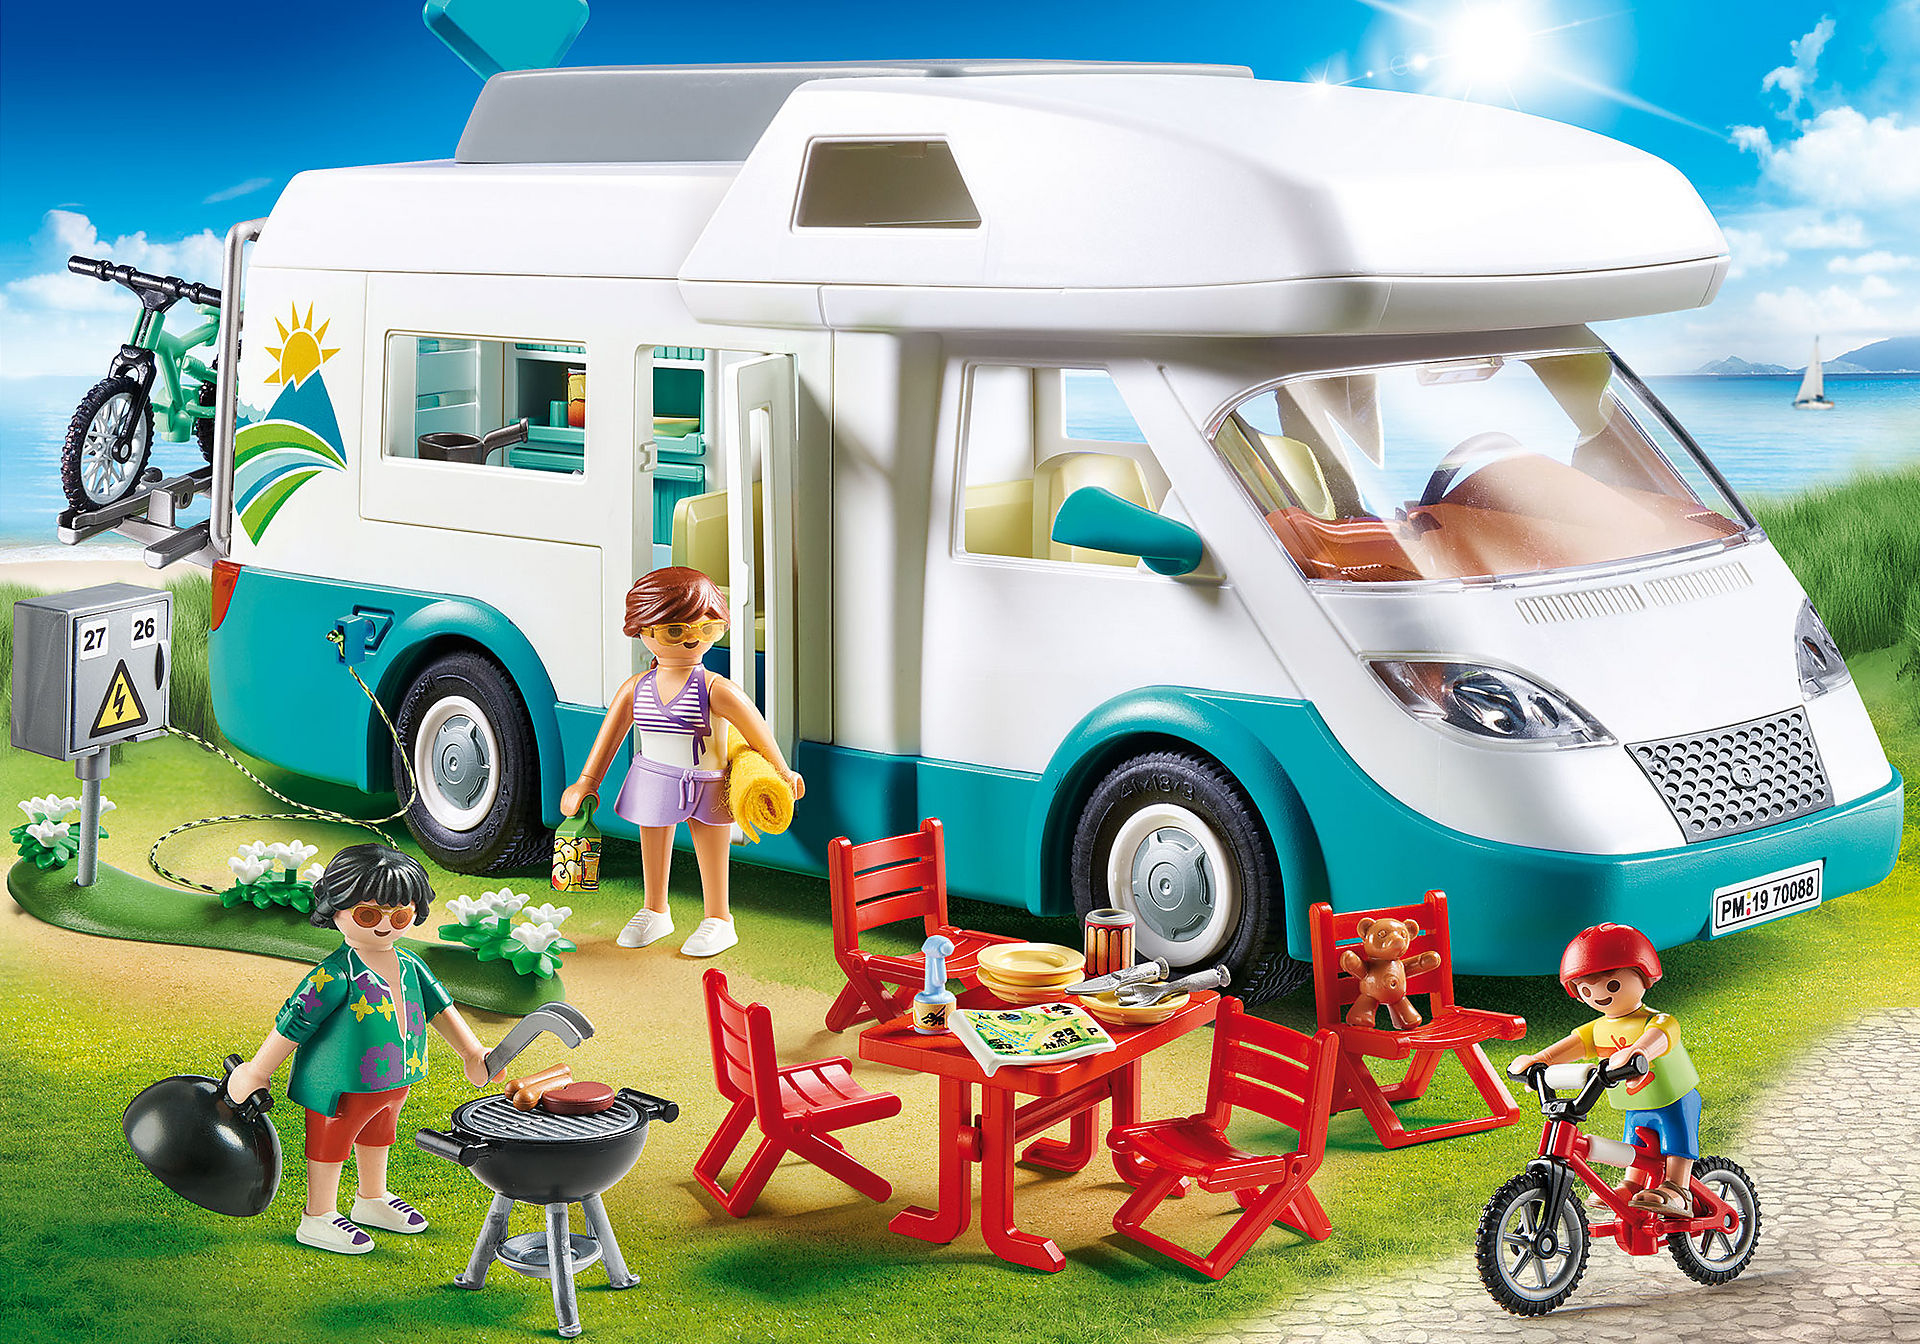 Famille et camping-car - 70088